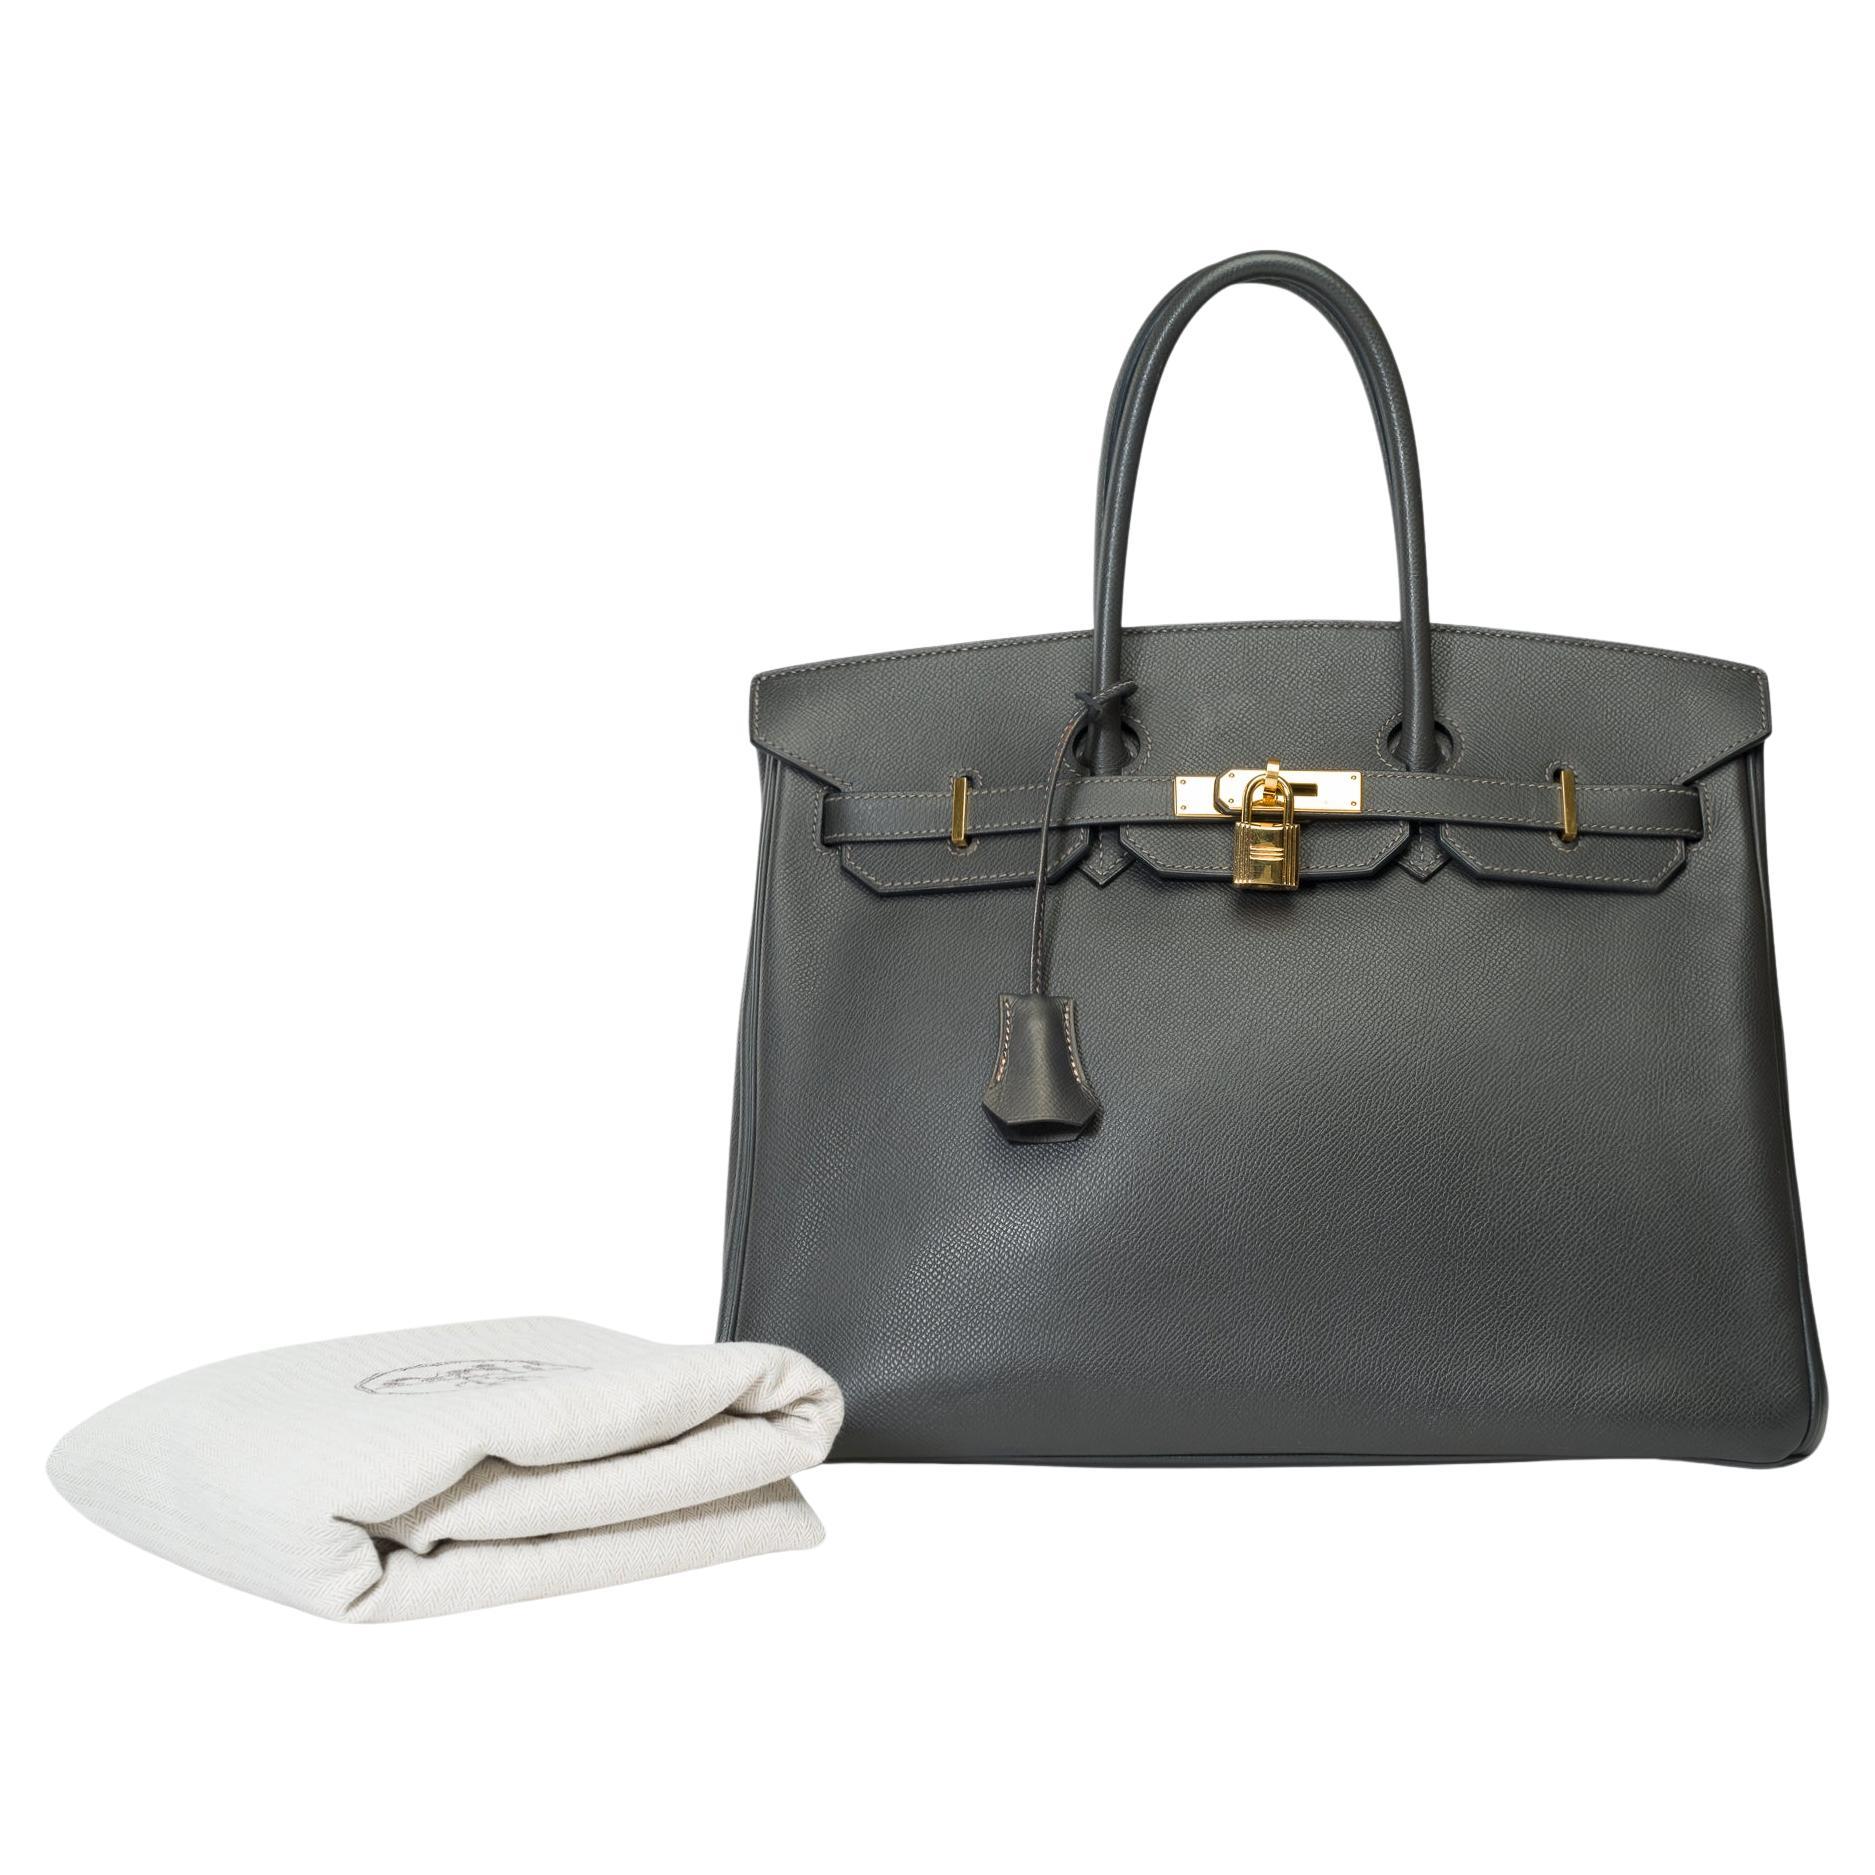 Amazing Hermès Birkin 35 handbag in Gray Graphite Epsom leather, GHW For Sale